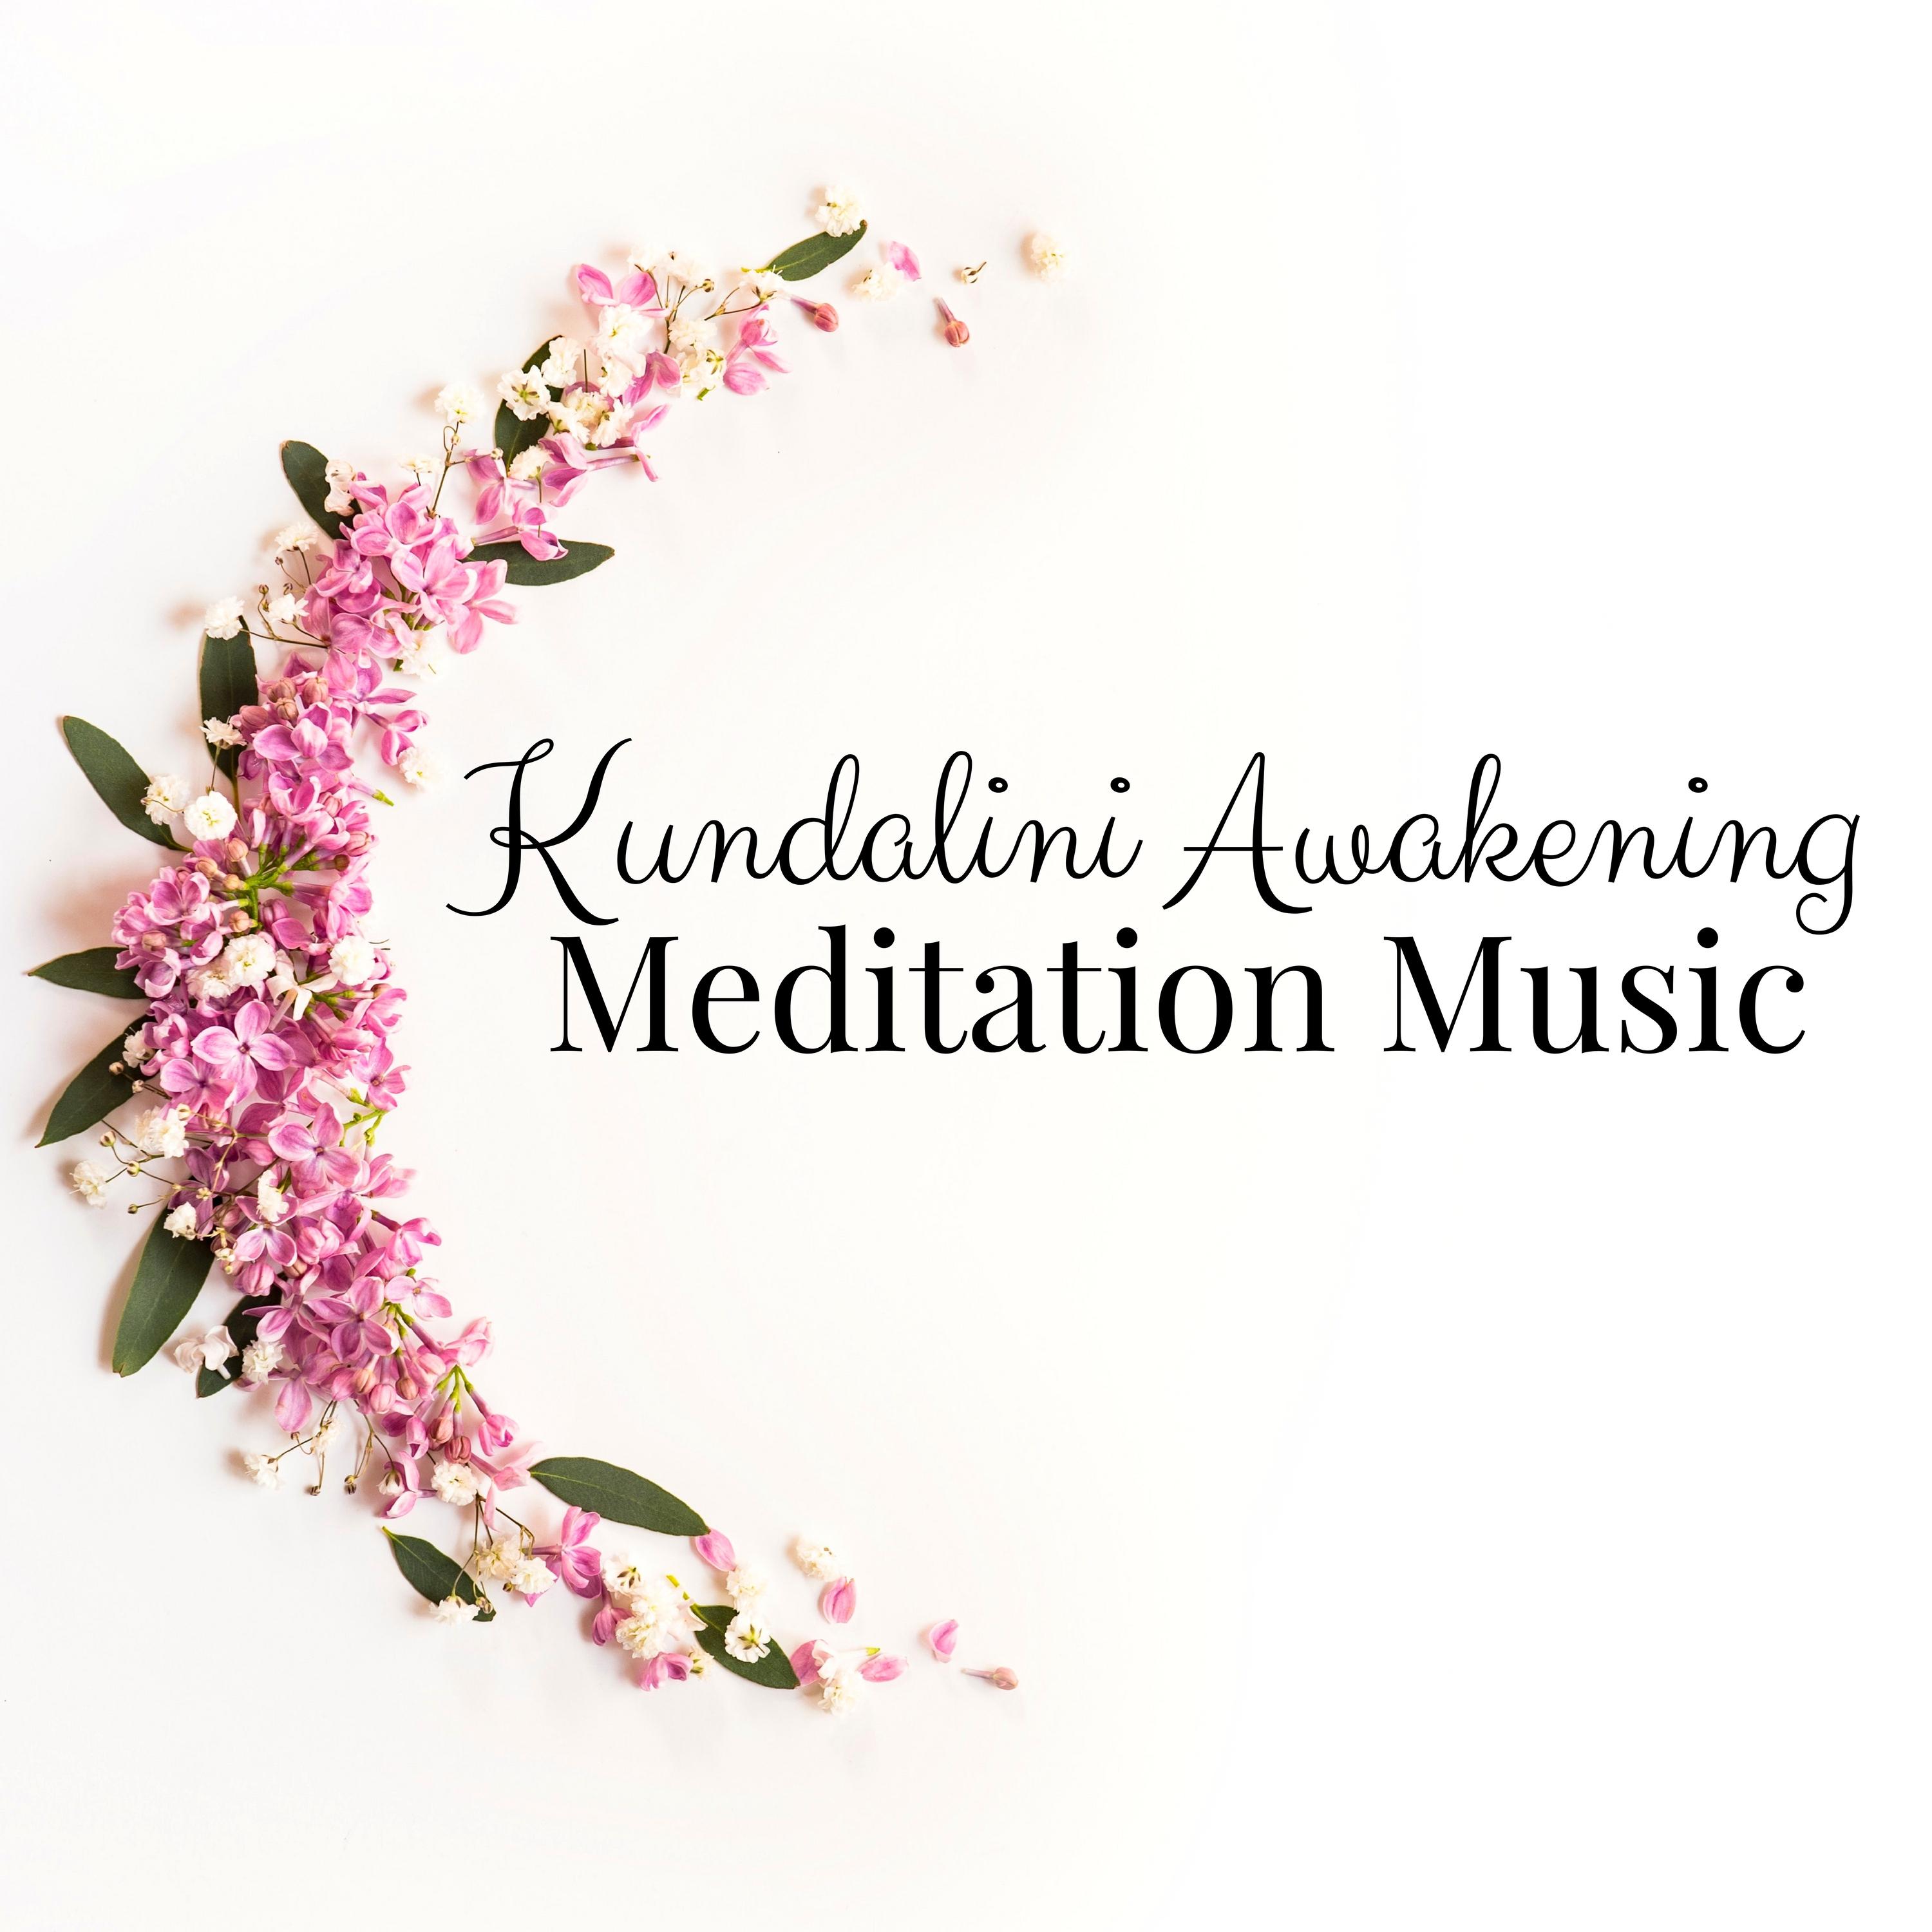 Kundalini Awakening Meditation Music